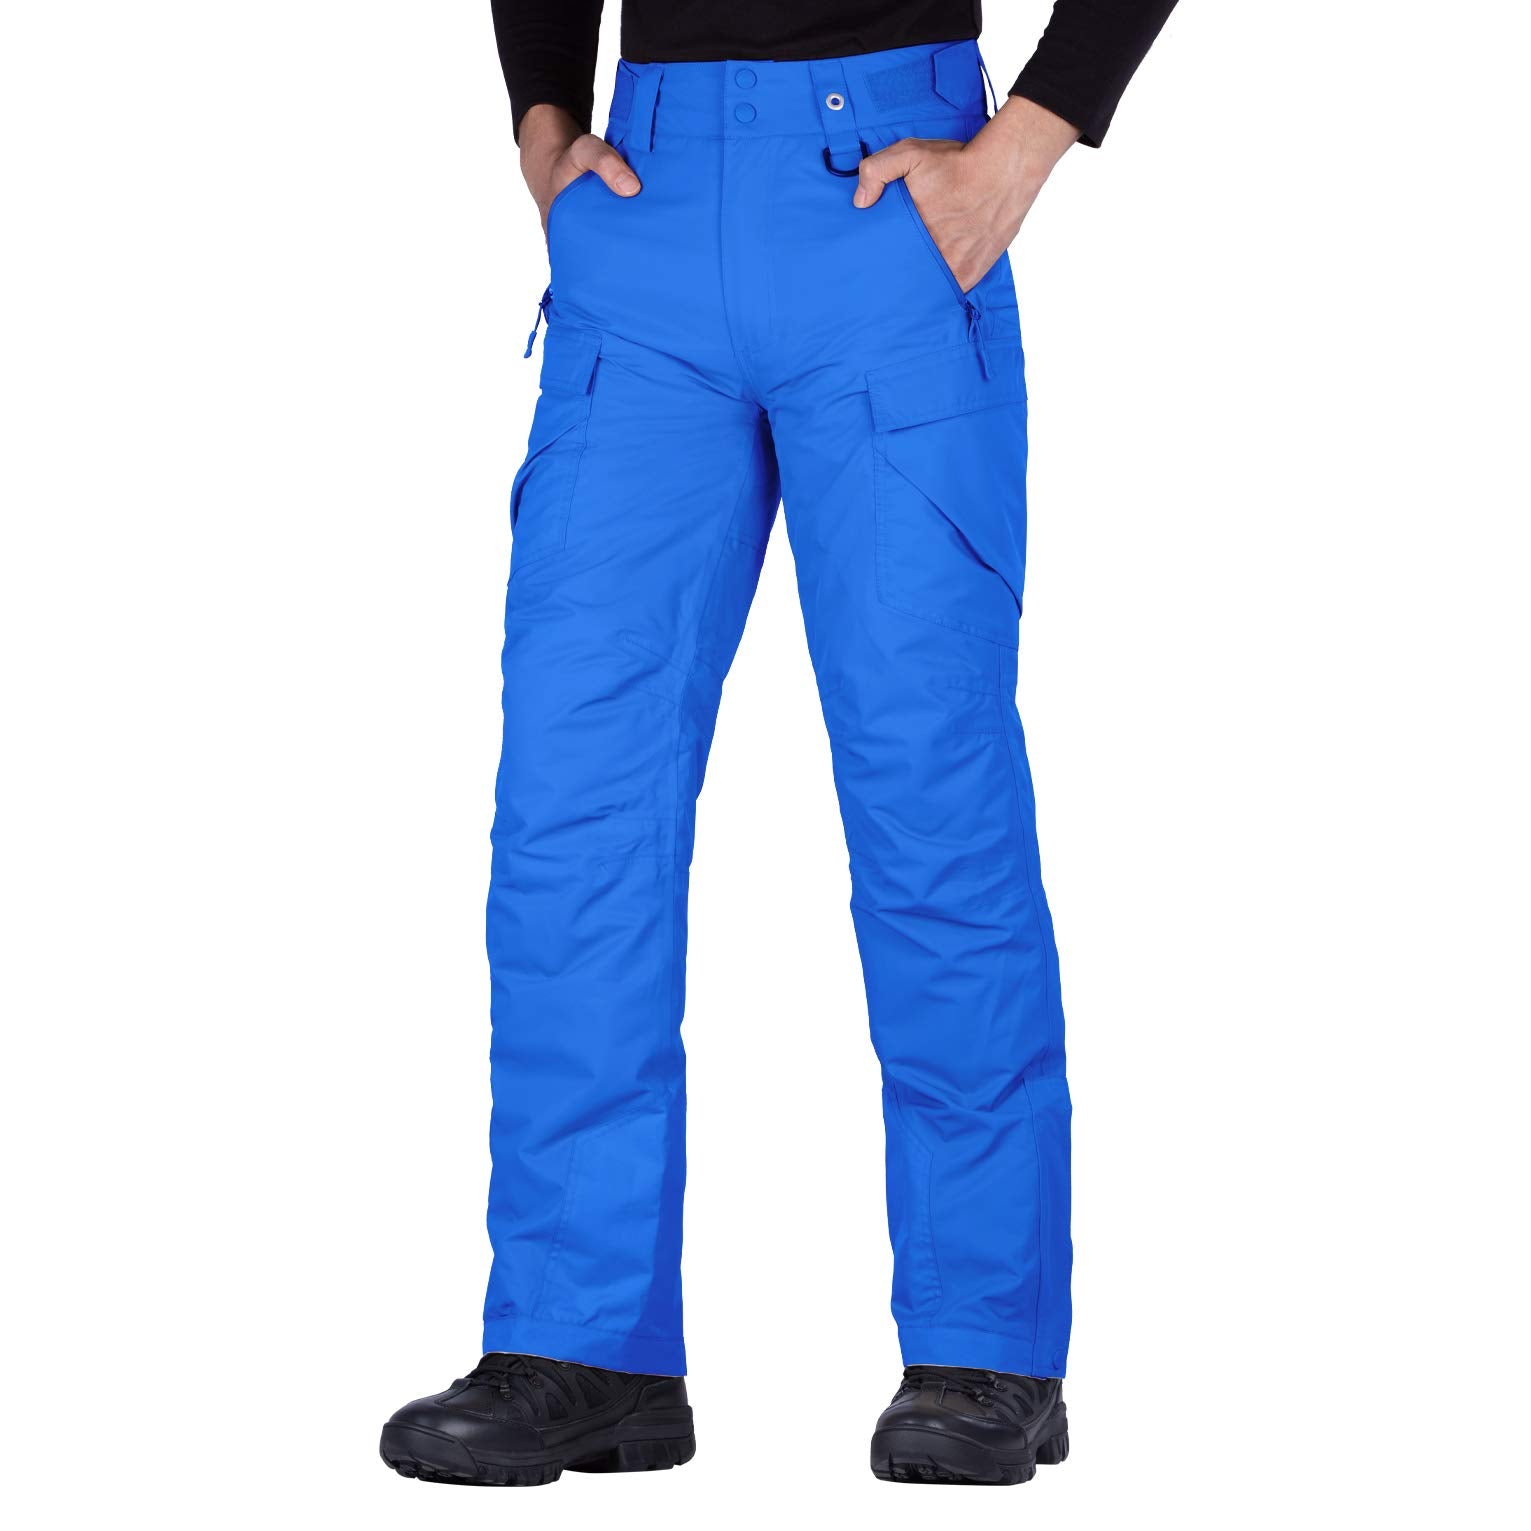 Lbq Winter Men's Waterproof Pants Outdoor Hiking Camping Fishing Sports Trousers Male Casual Soft Shell Fleece Warm Cargo Pants 5xl BLUE Thin